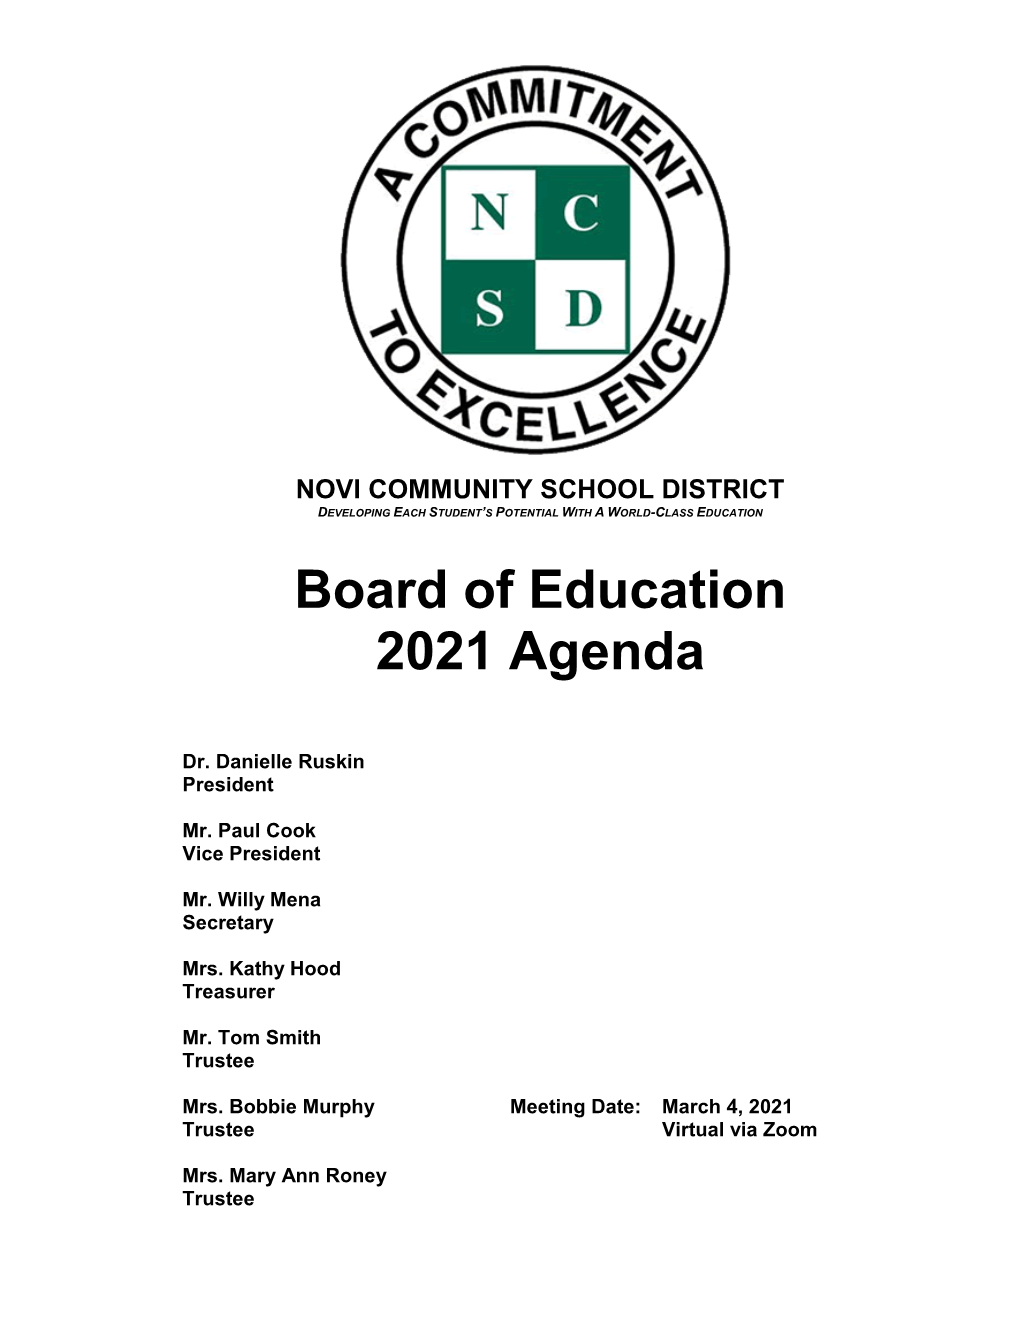 Board of Education 2021 Agenda